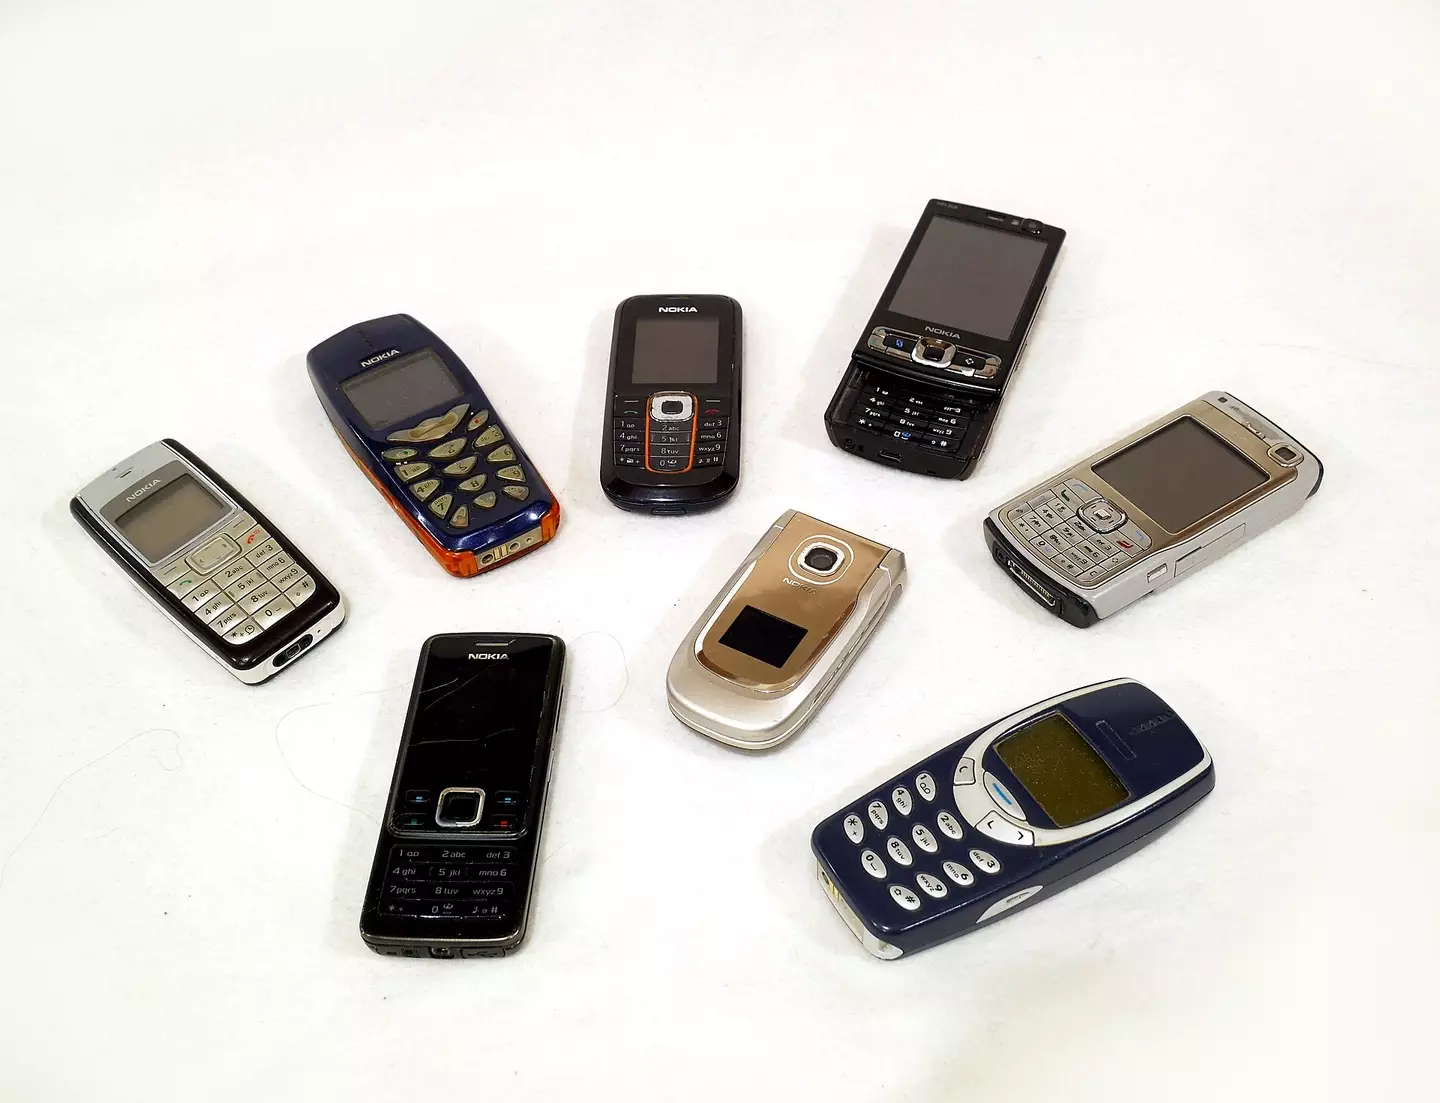 Nokia's range of phones in the year 2000.